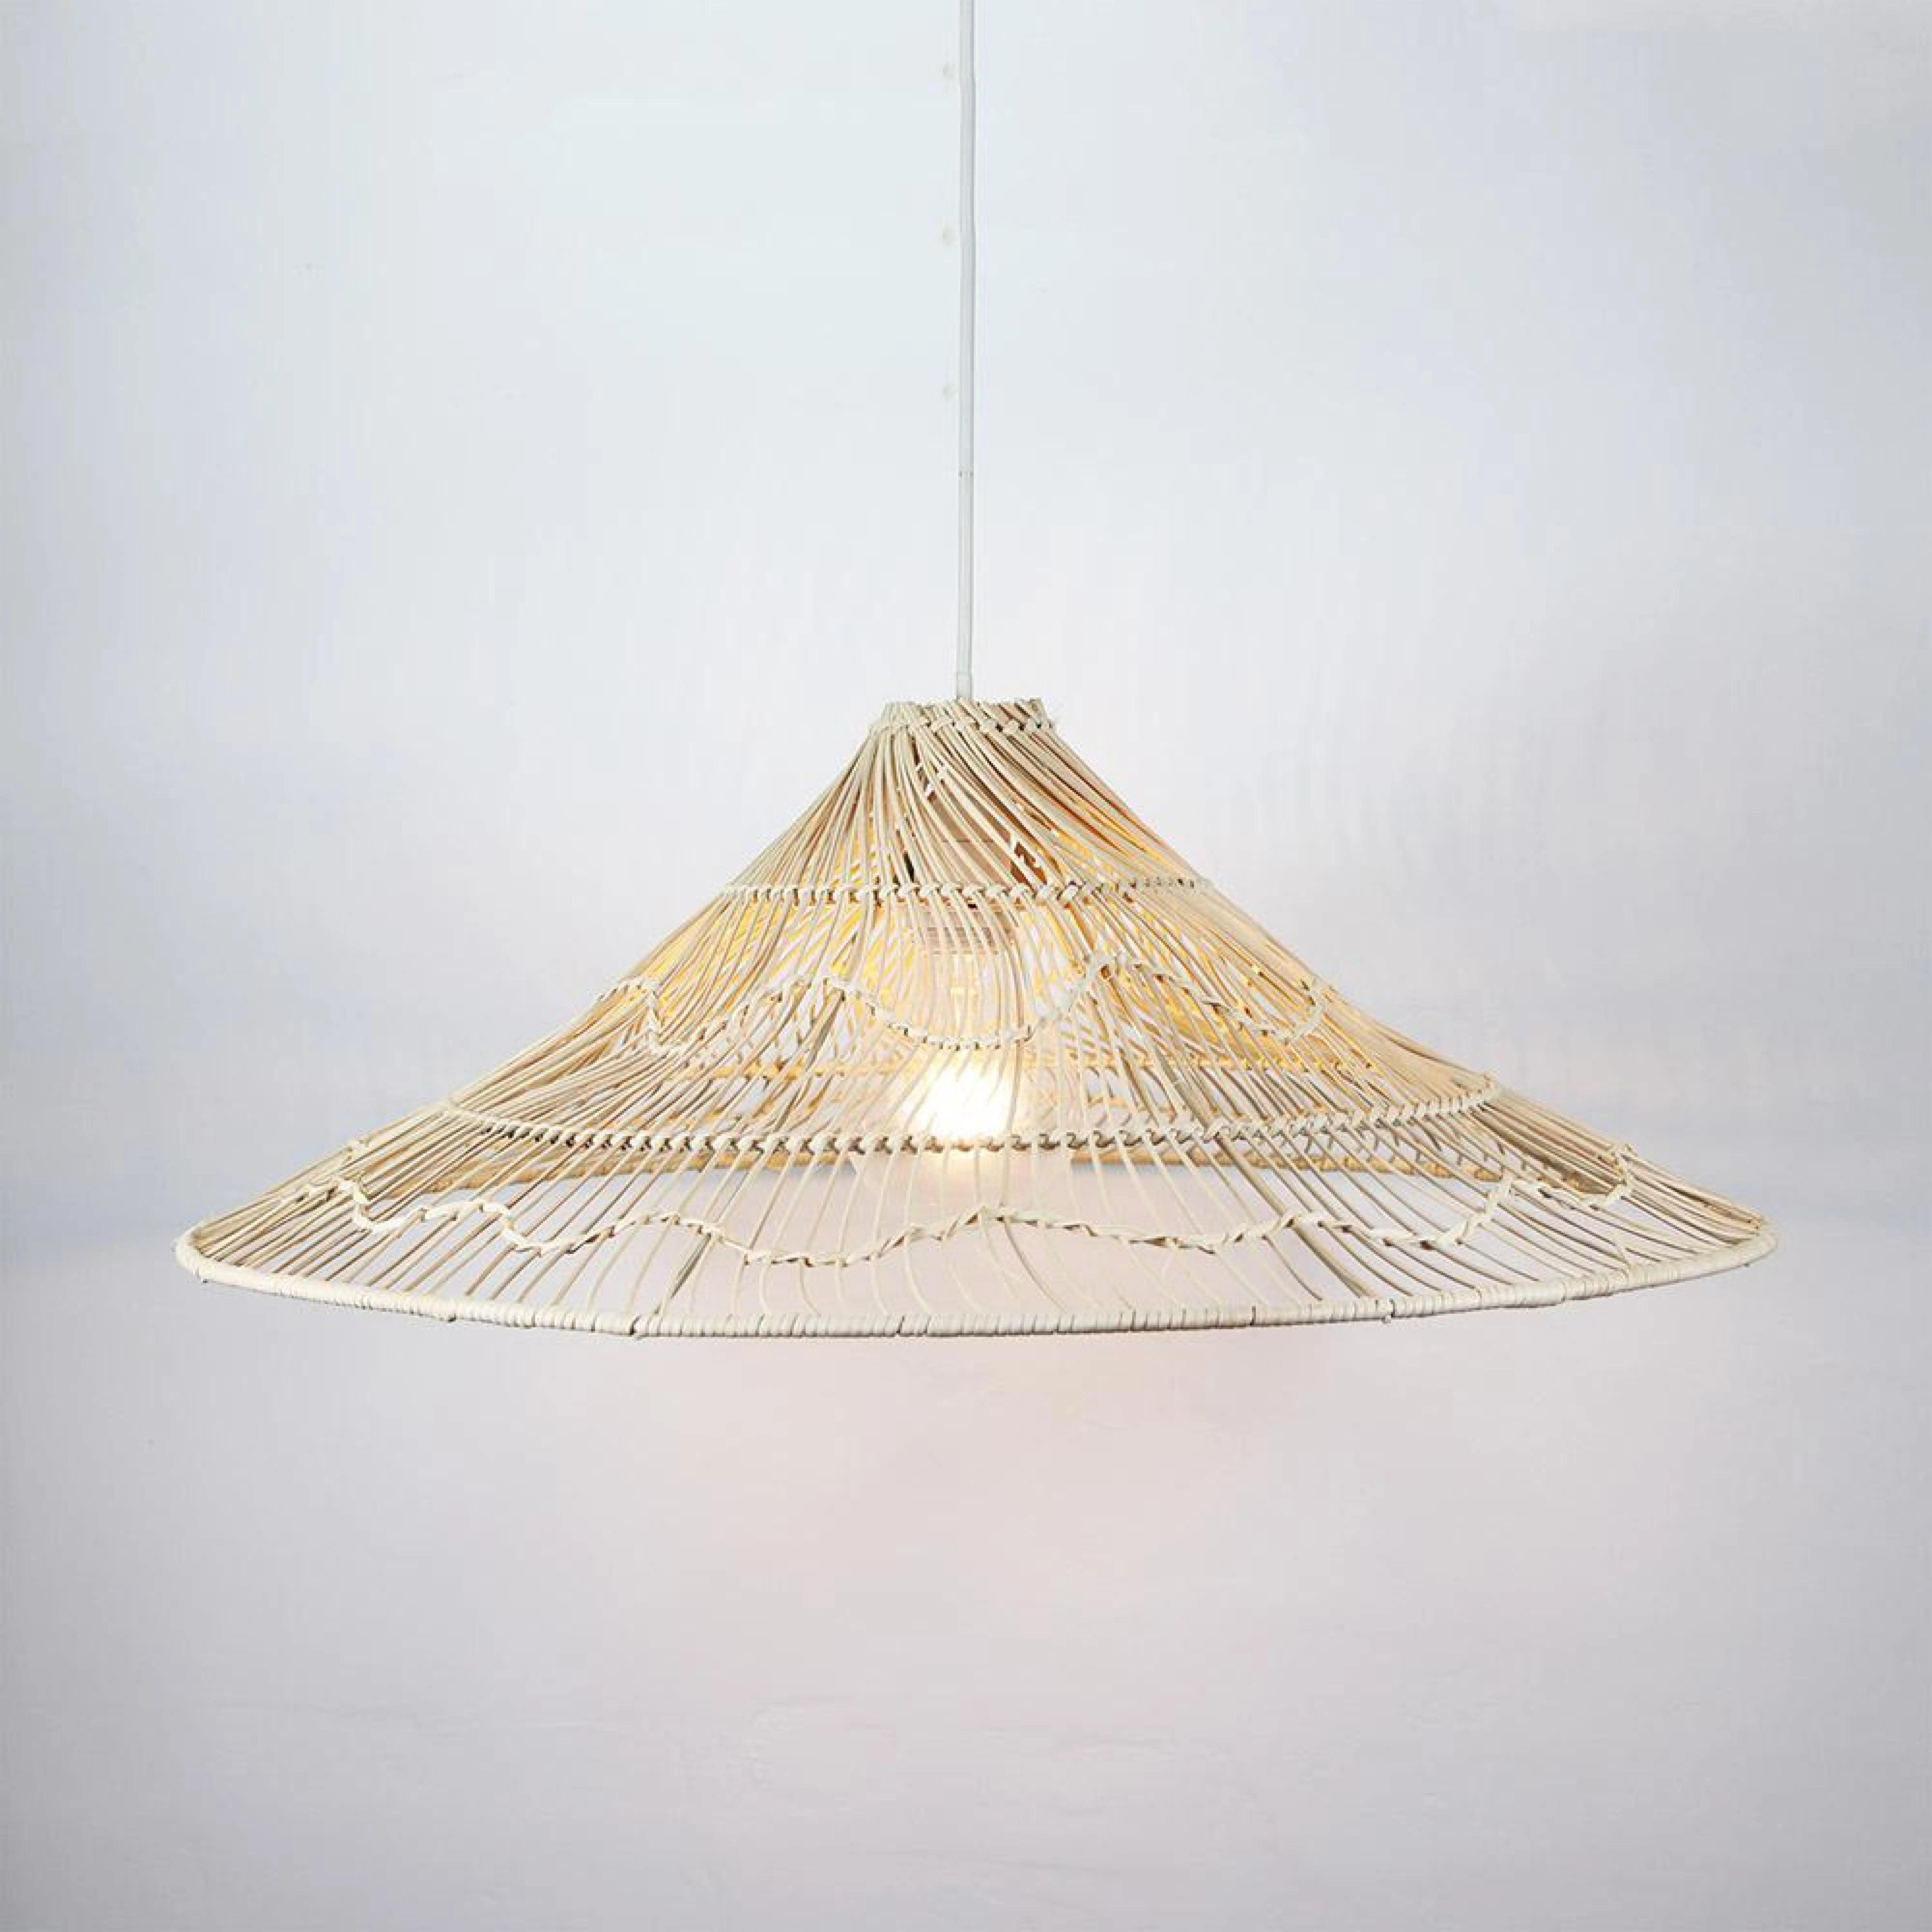 New Collection Vintage Natural Rattan Decor Chandelier Ceiling Light For Living Room